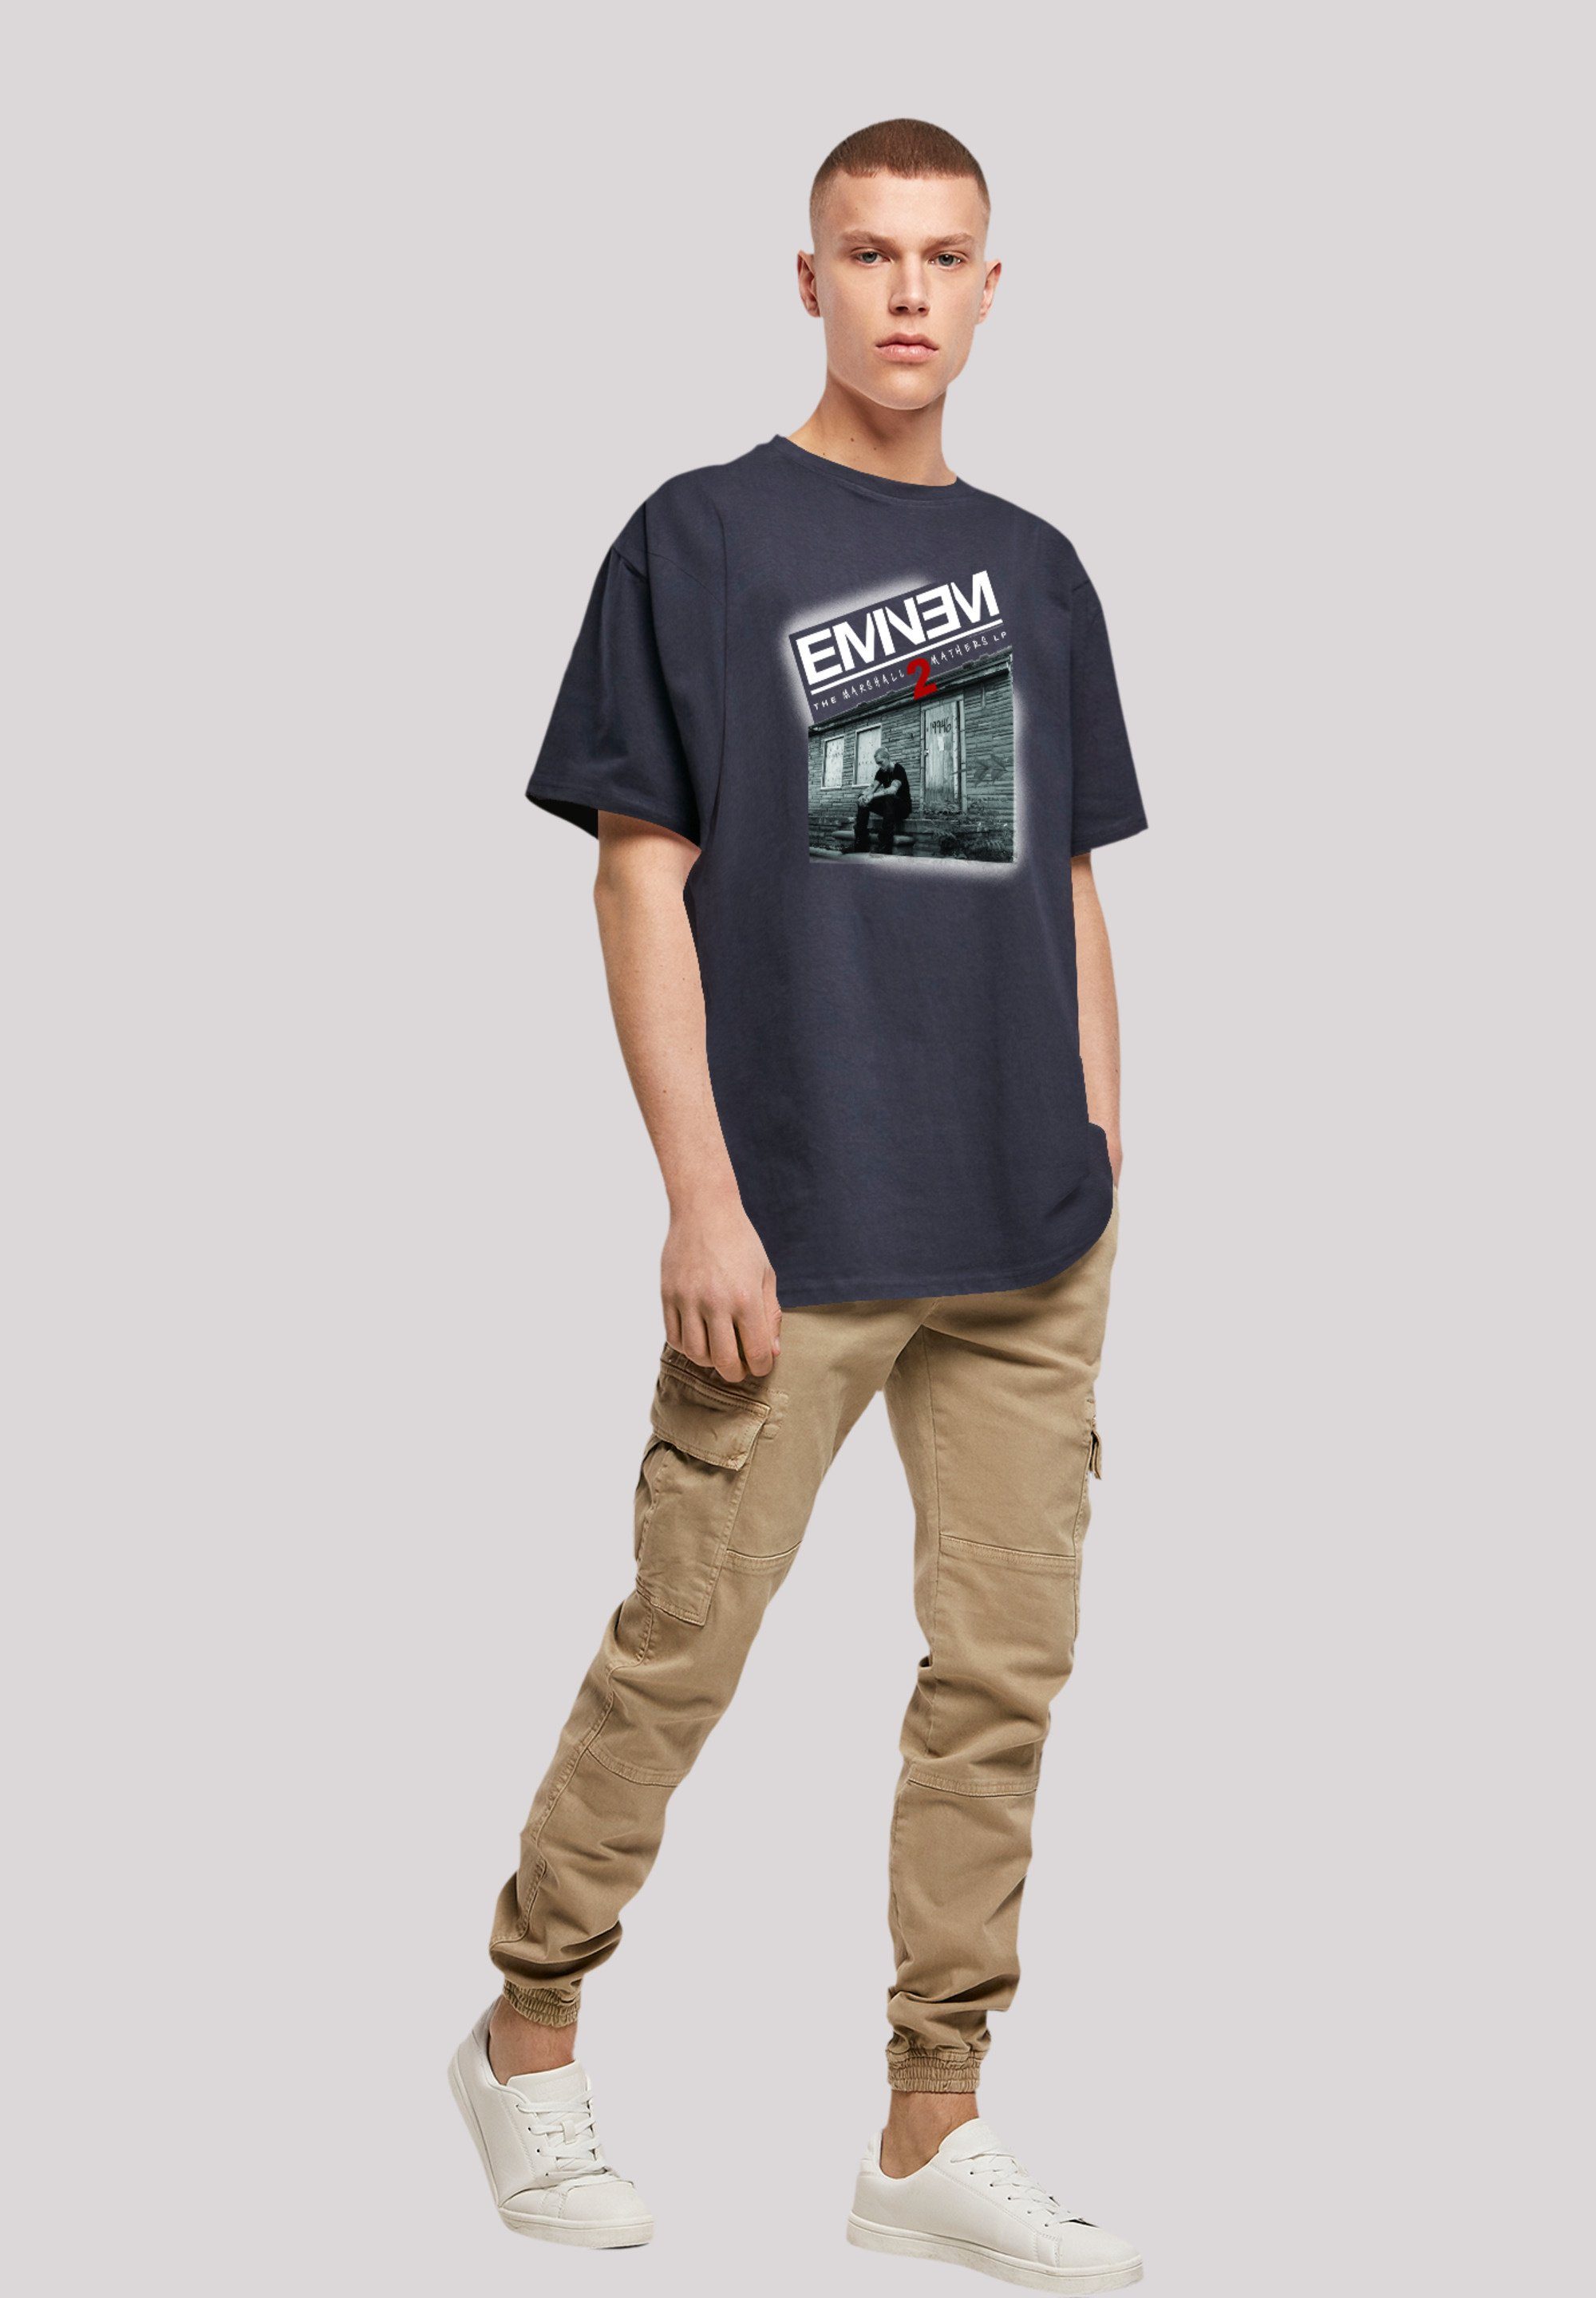 F4NT4STIC T-Shirt Oldschool Music Marshall navy 2 Premium Mathers Rap Musik Eminem Qualität